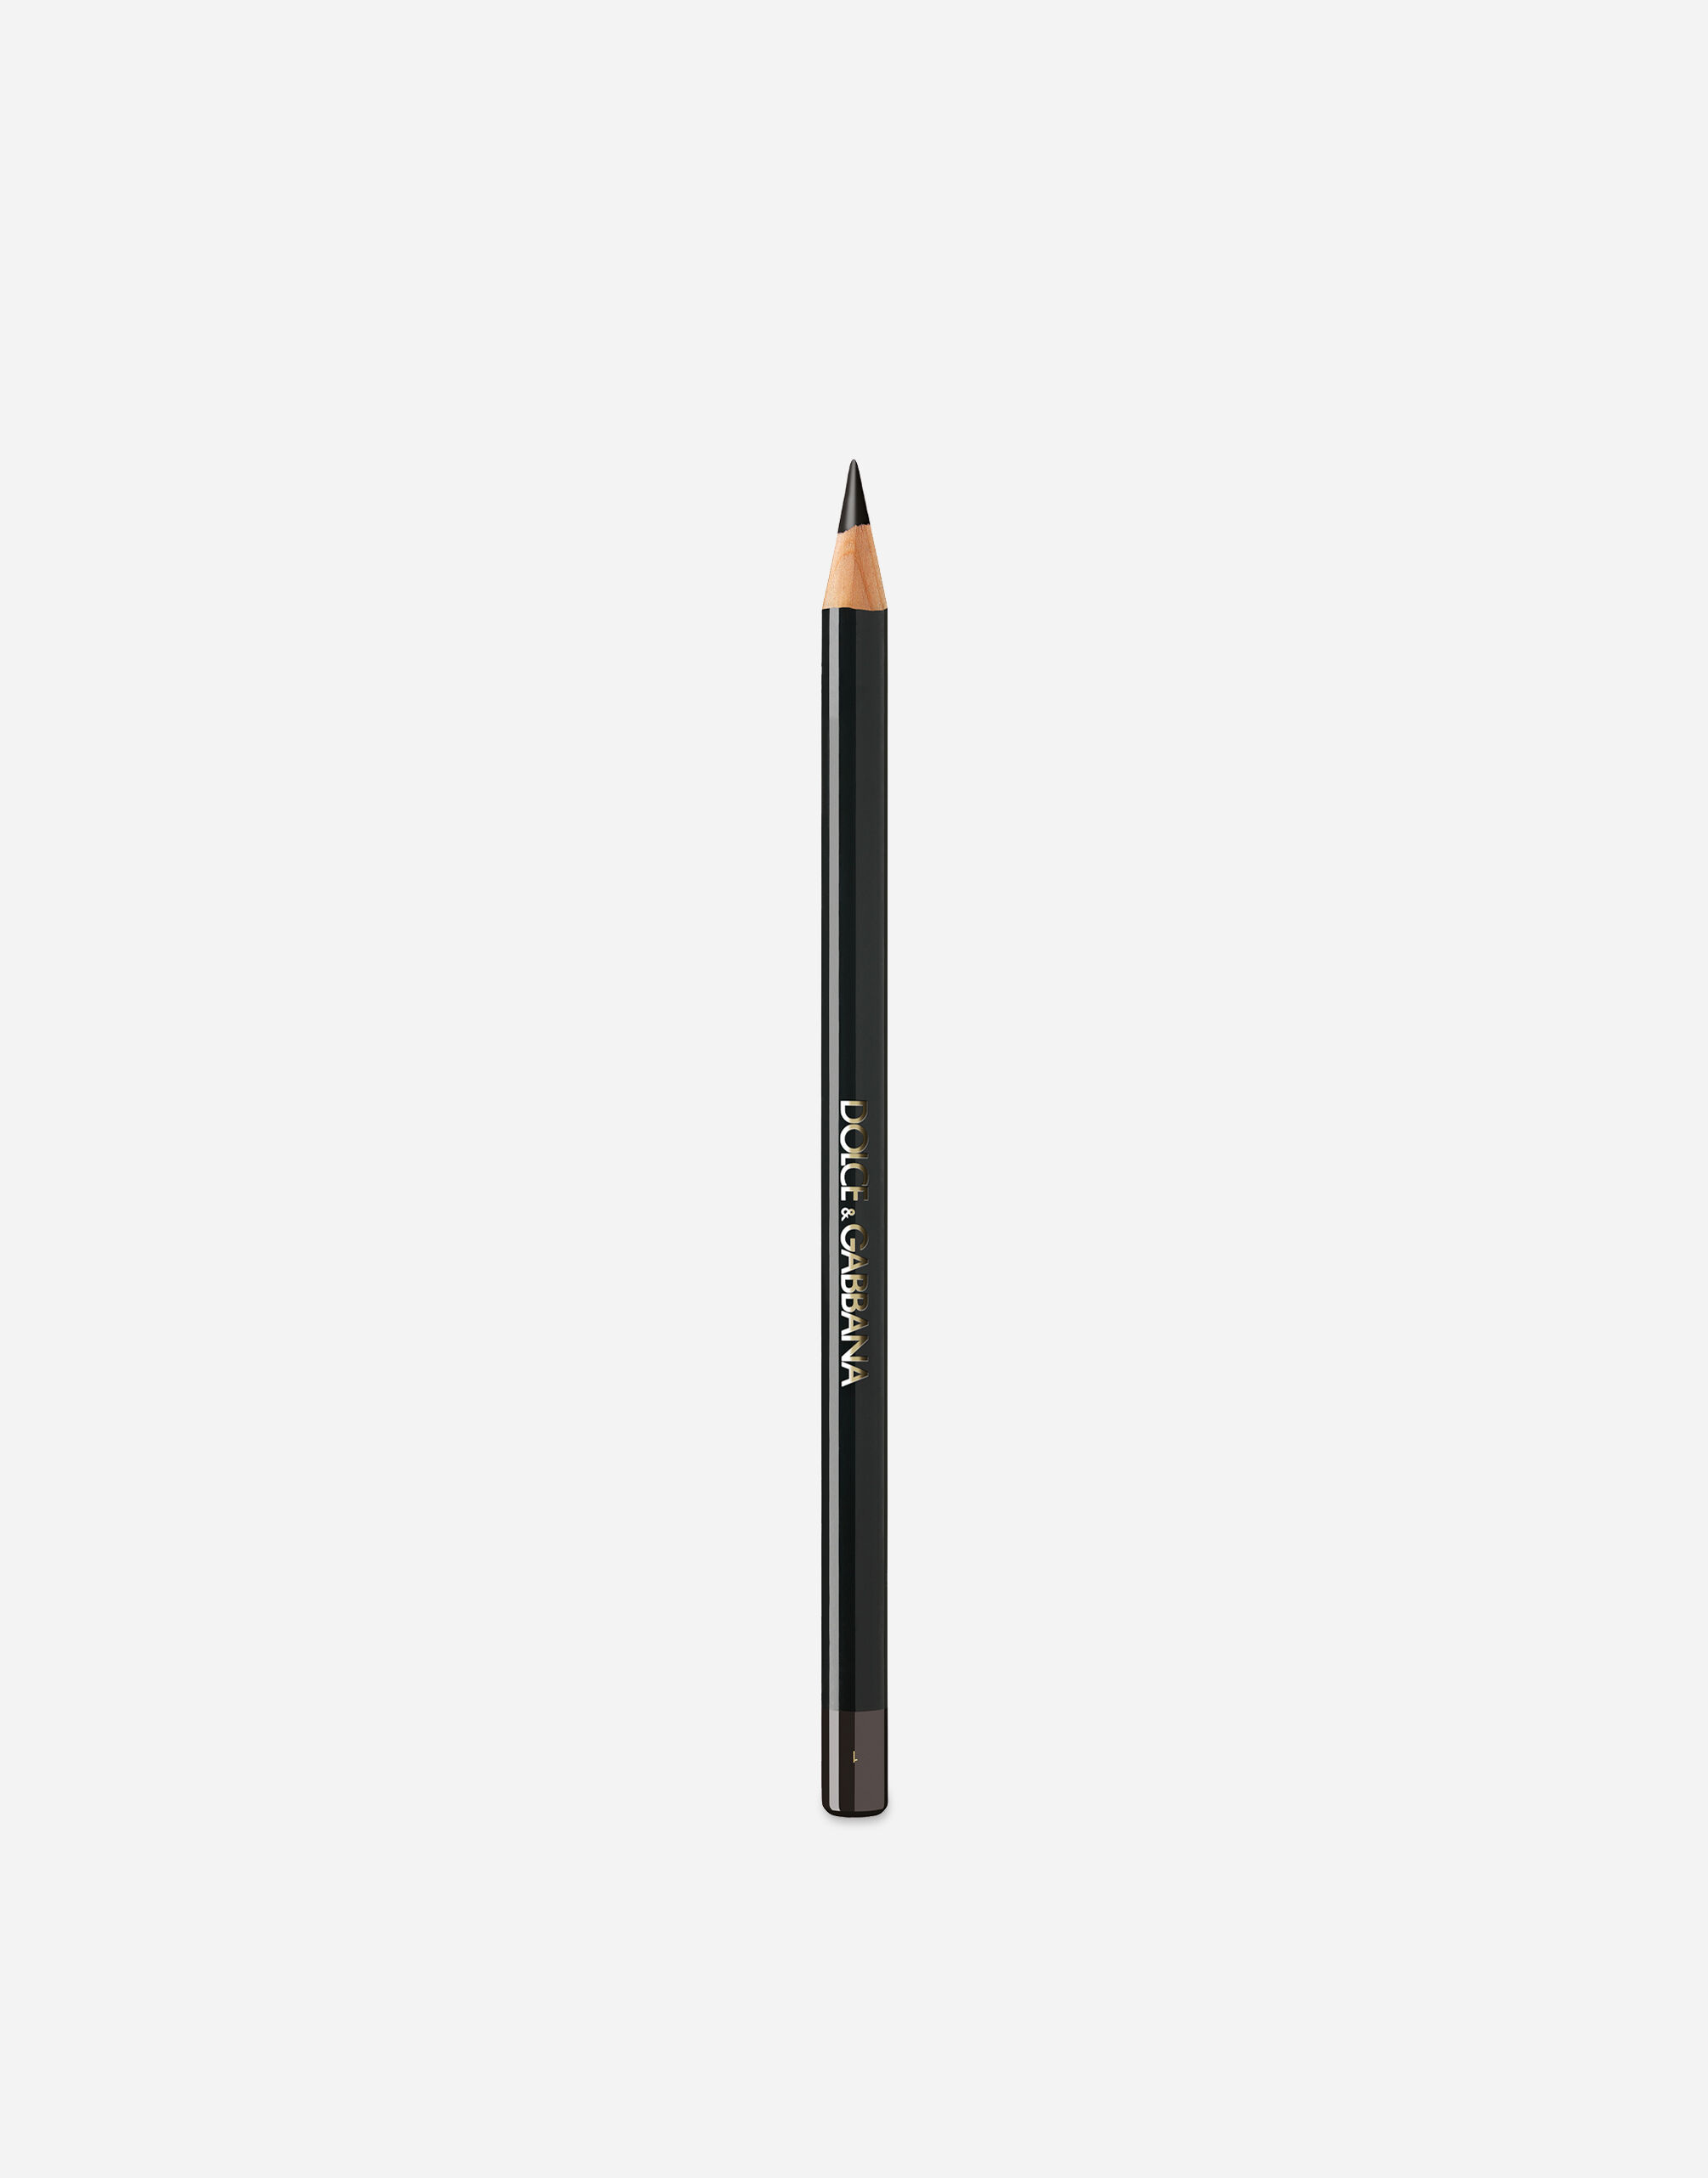 Карандаш-кайал для глаз DOLCE & GABBANA Khol Pencil стойкий, тон 1 True Black, 2,04 г водостойкий карандаш для губ pupa it’s delicious vamp lip pencil 14 cherry